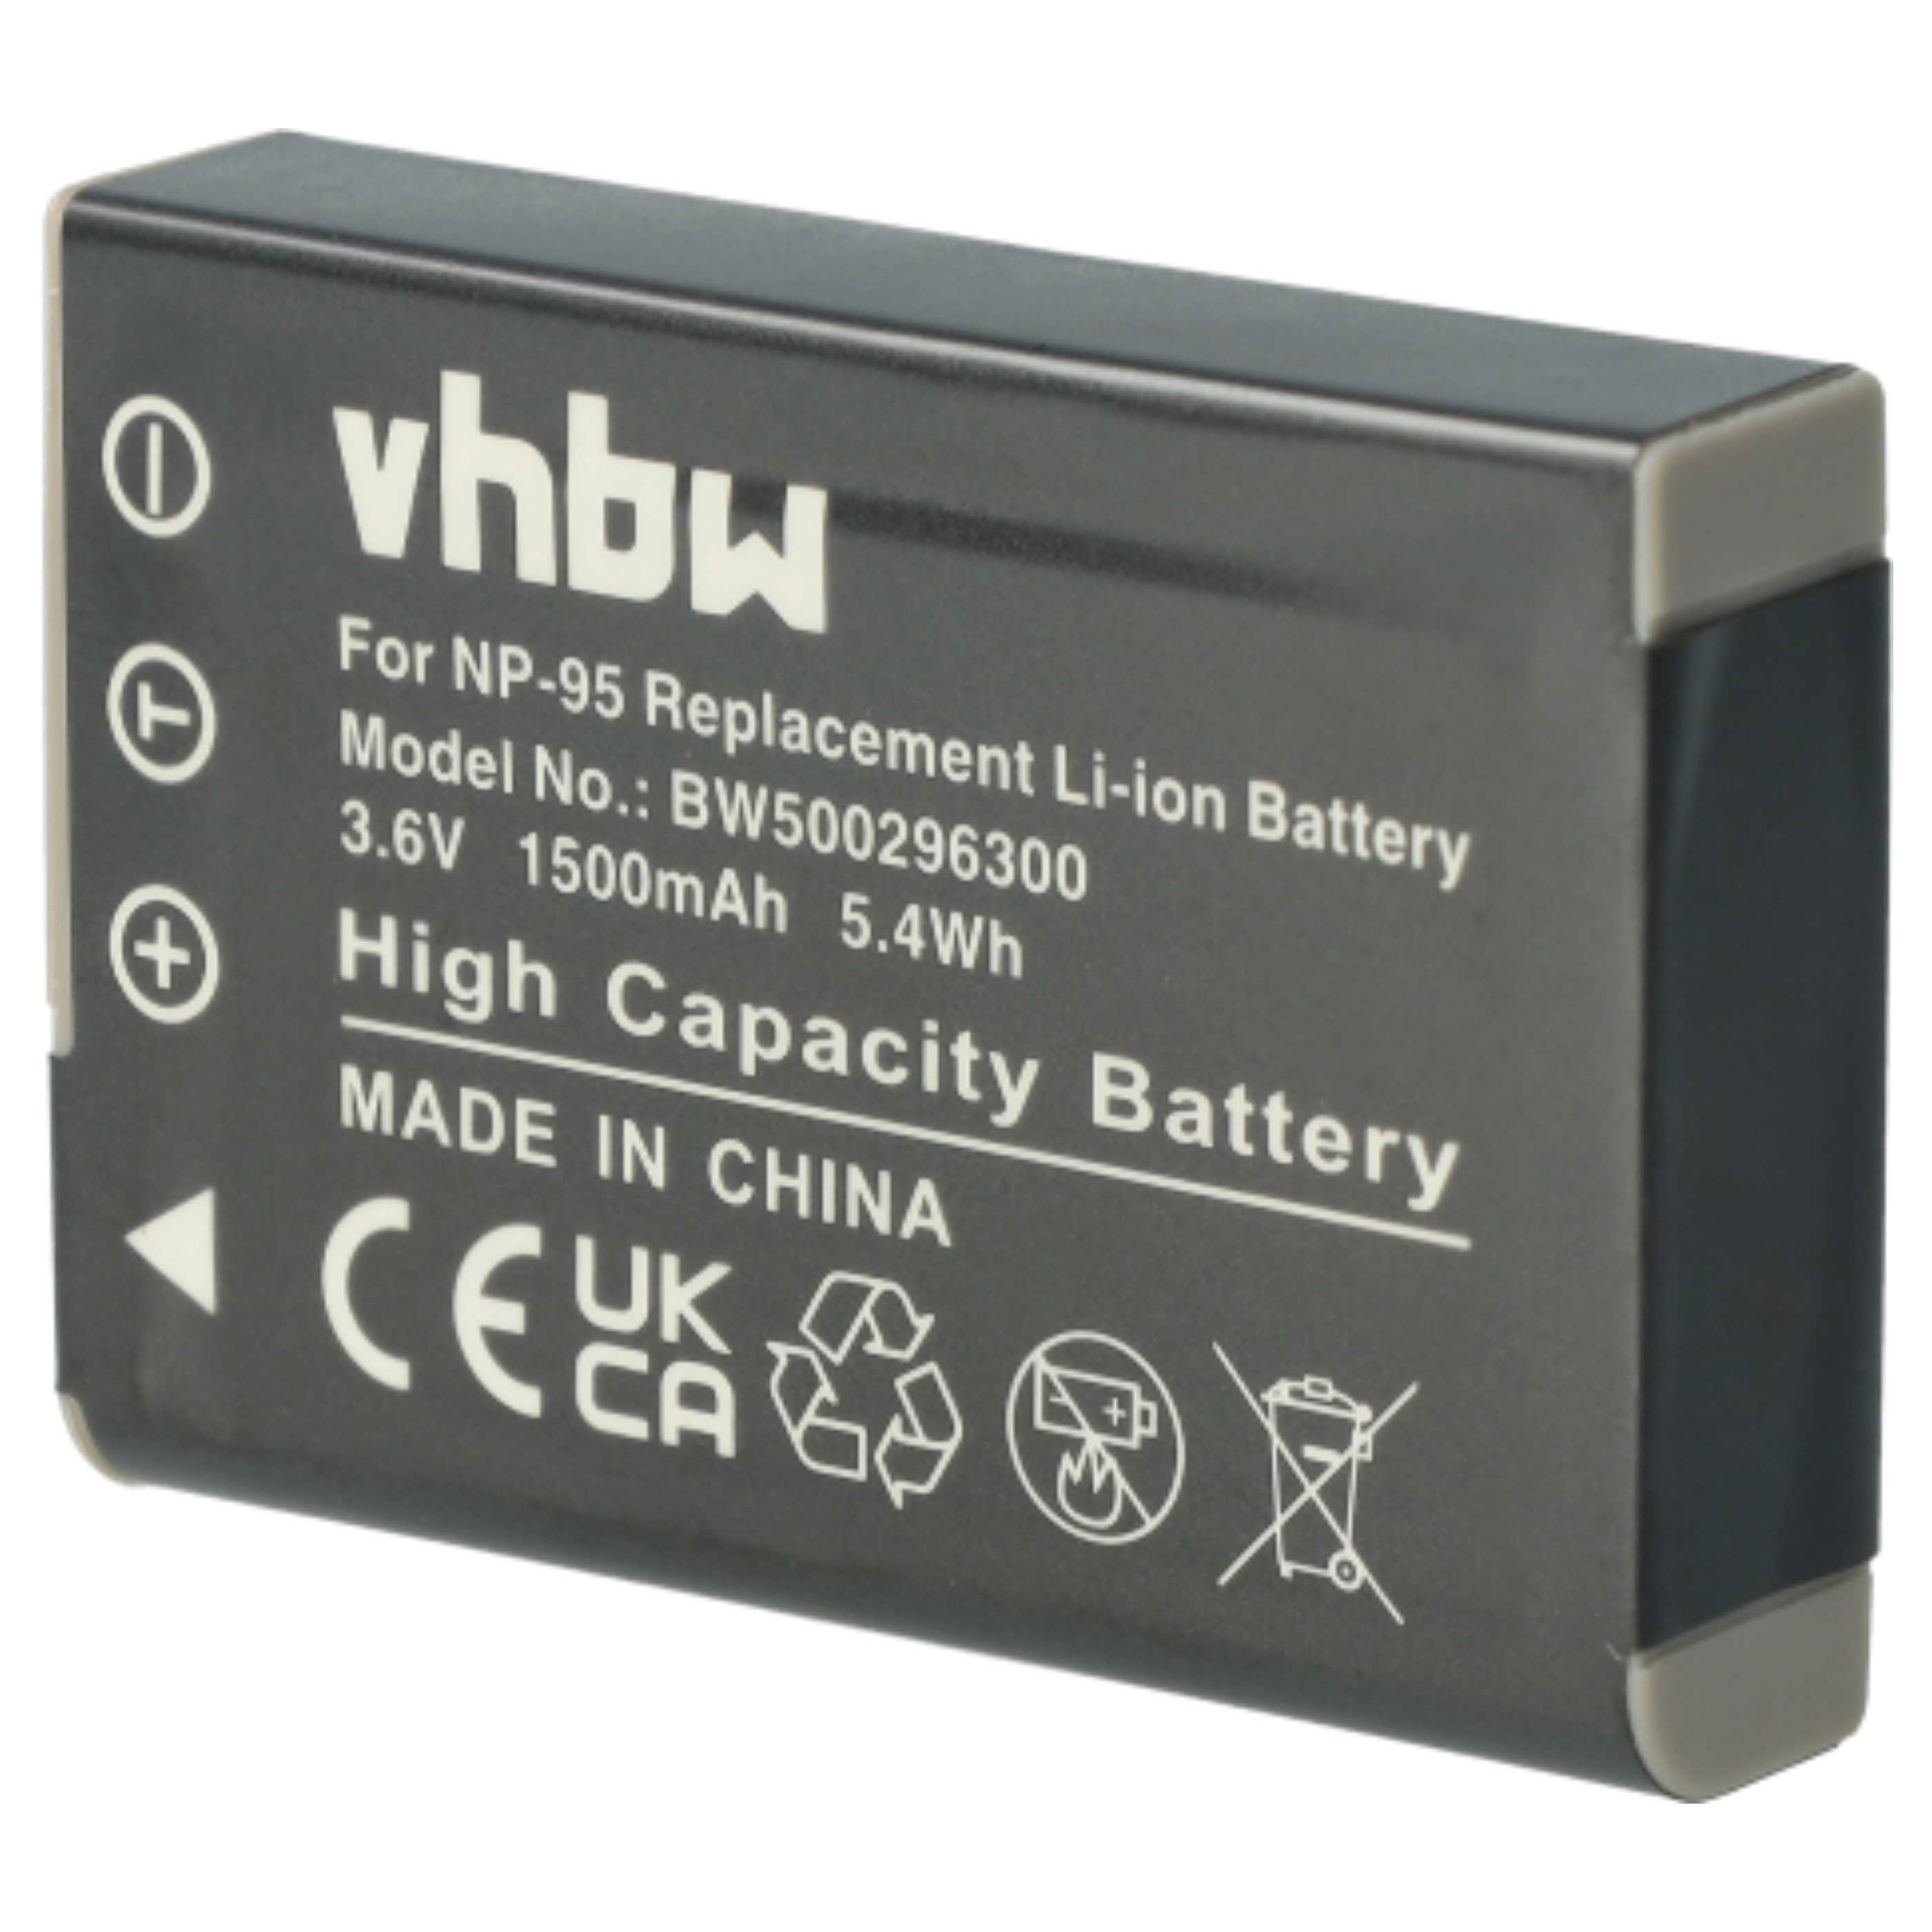 Batteria sostituisce Ricoh DB-90 per fotocamera Ricoh - 1500mAh 3,6V Li-Ion